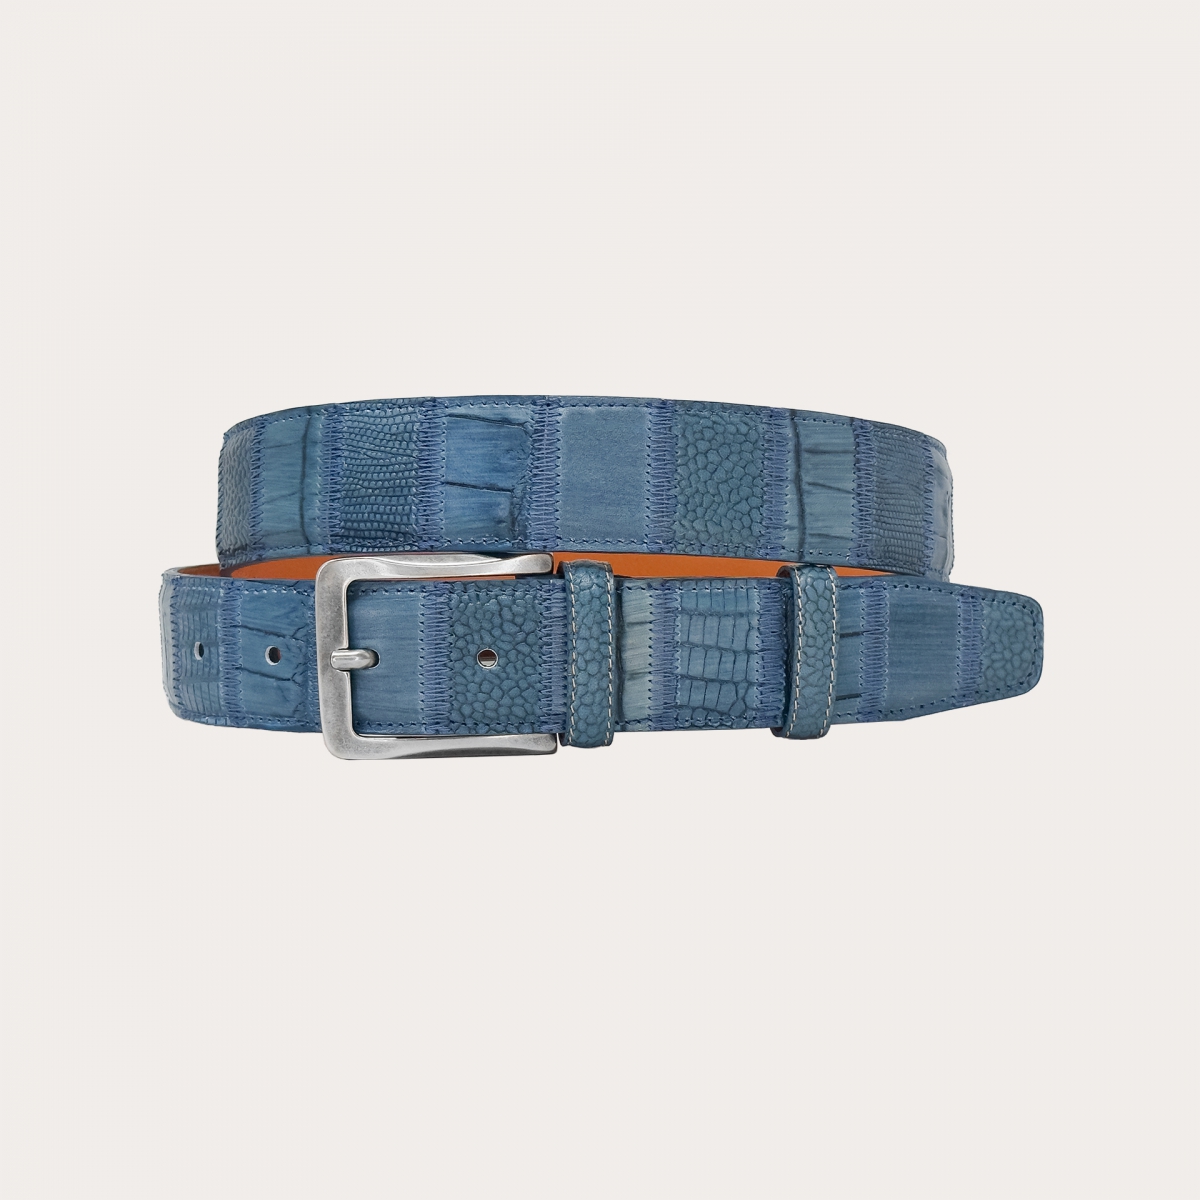 Blue jeans leather belt with patchwork craftsmanship